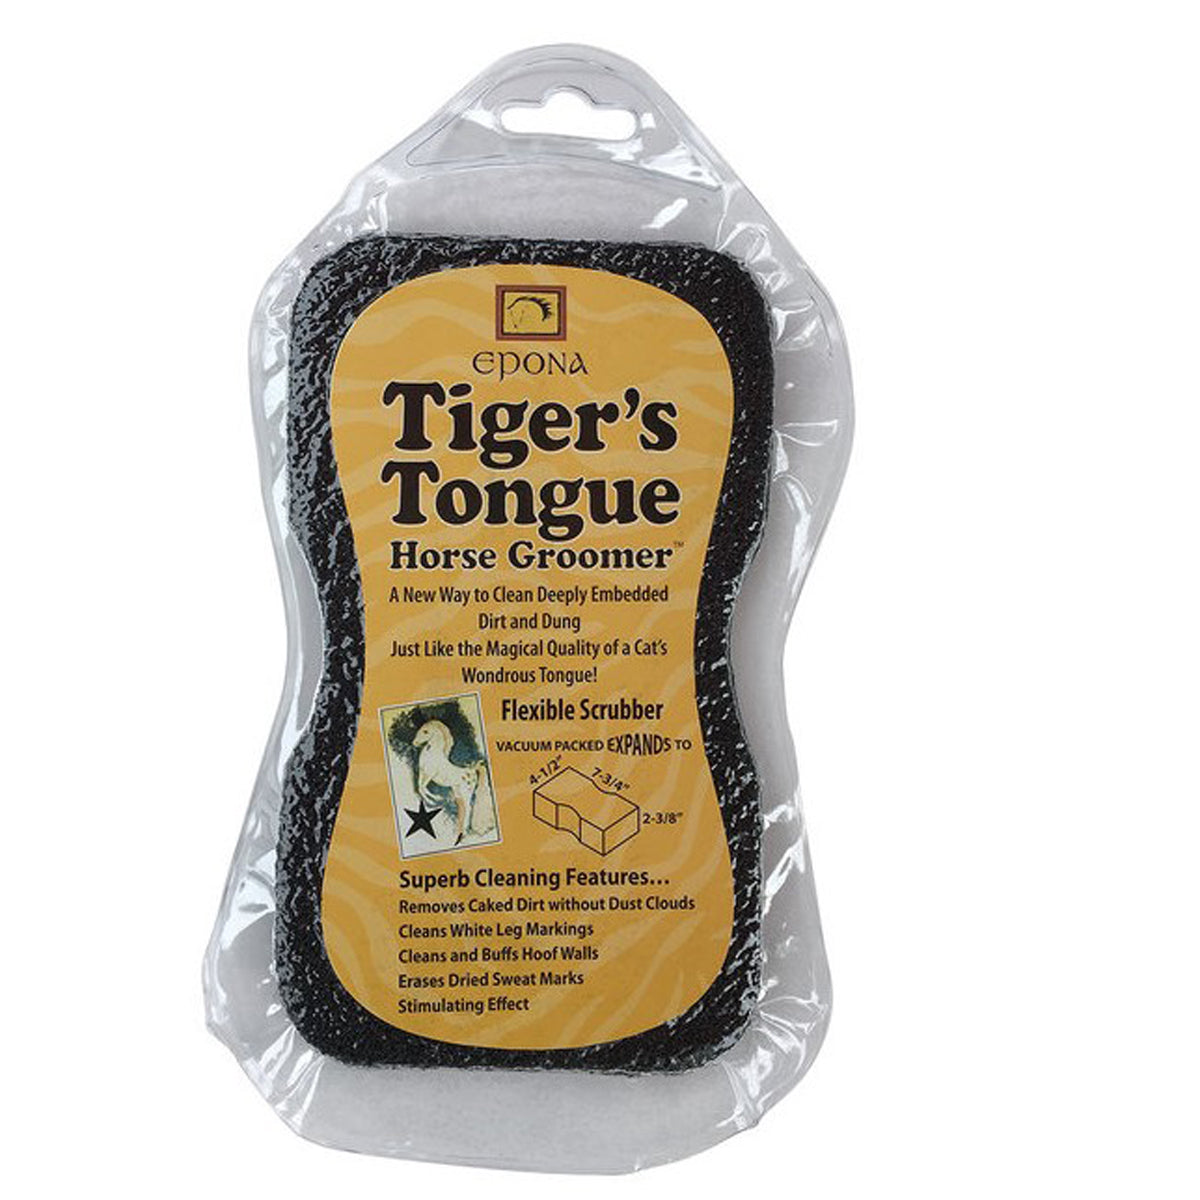 Epona Tiger's Tongue Horse Groomer